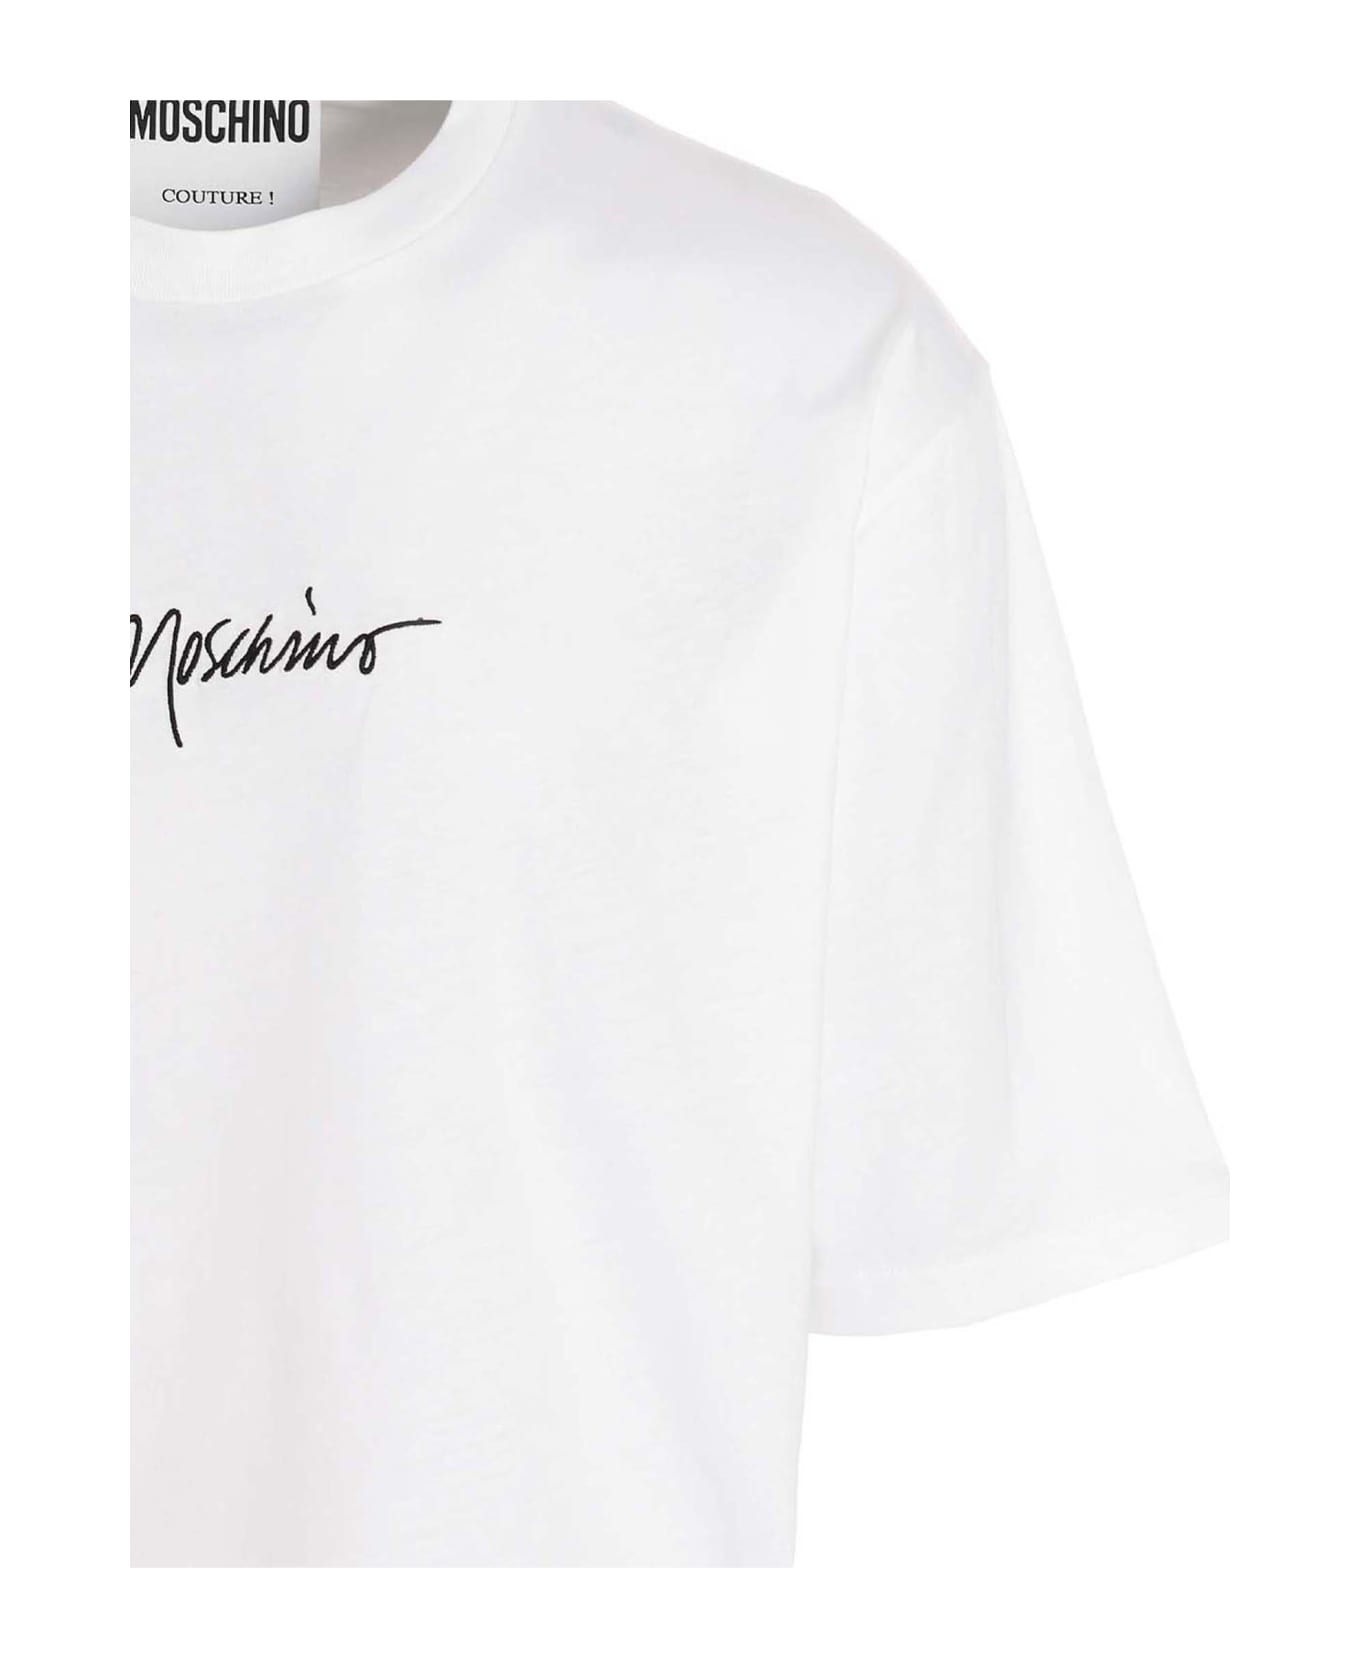 Moschino Logo Embroidery T-shirt - Bianco